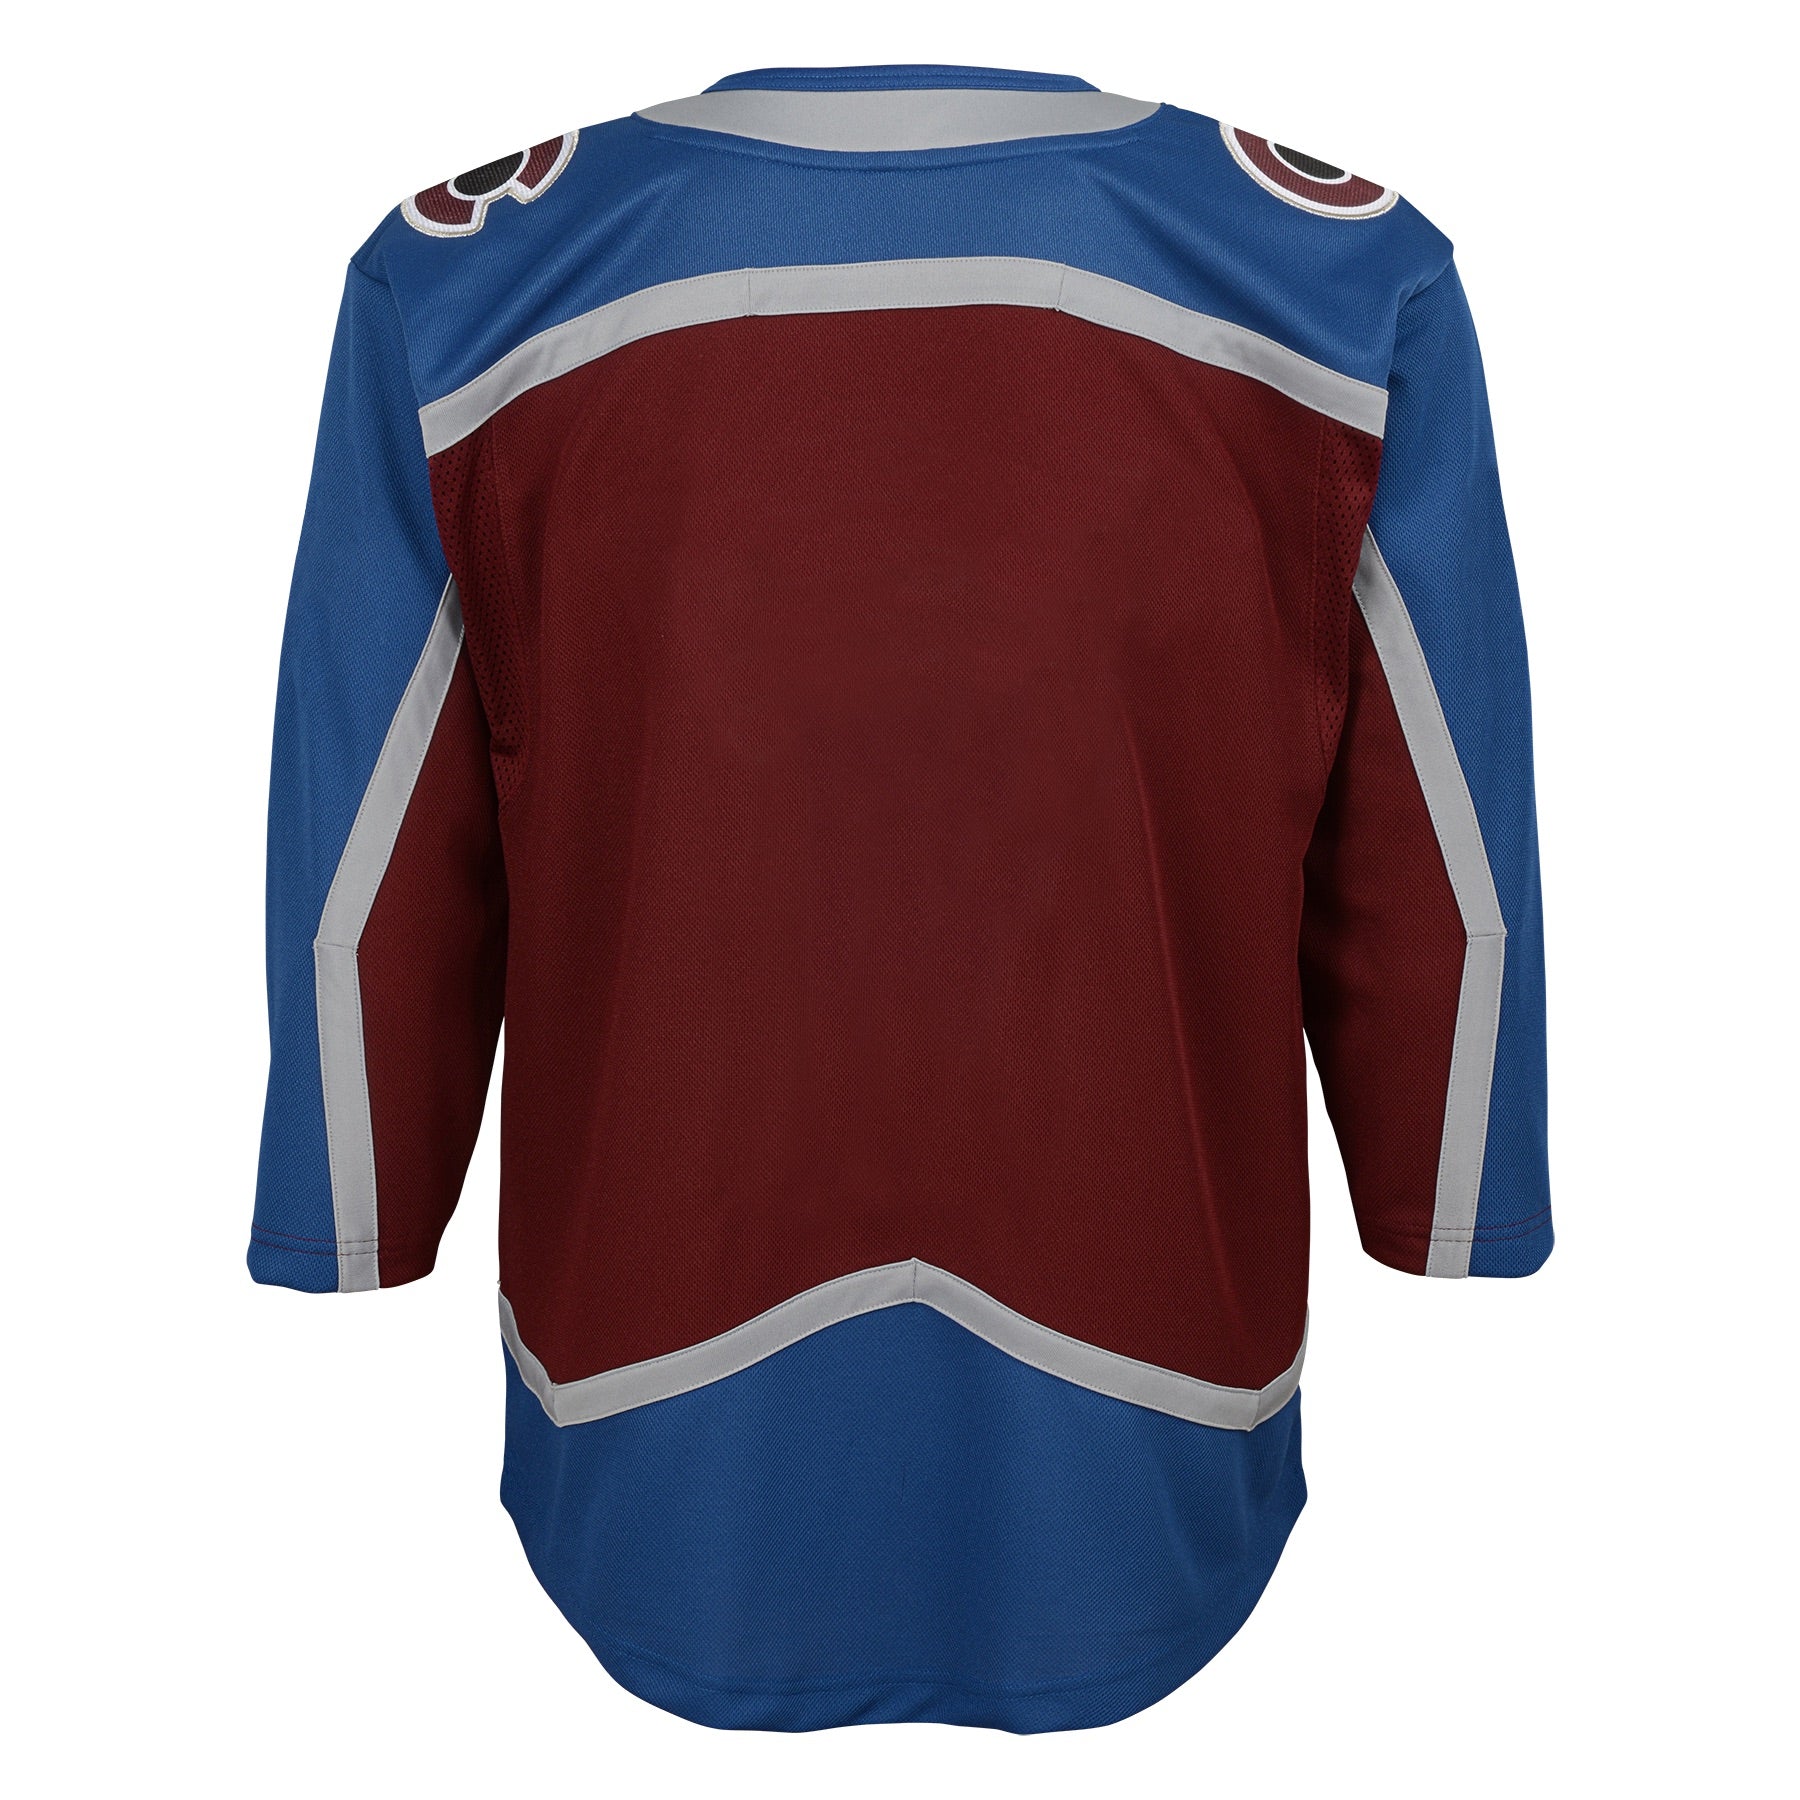  NHL Colorado Avalanche Premier Jersey, Maroon, Small : Sports  Fan Hockey Jerseys : Sports & Outdoors